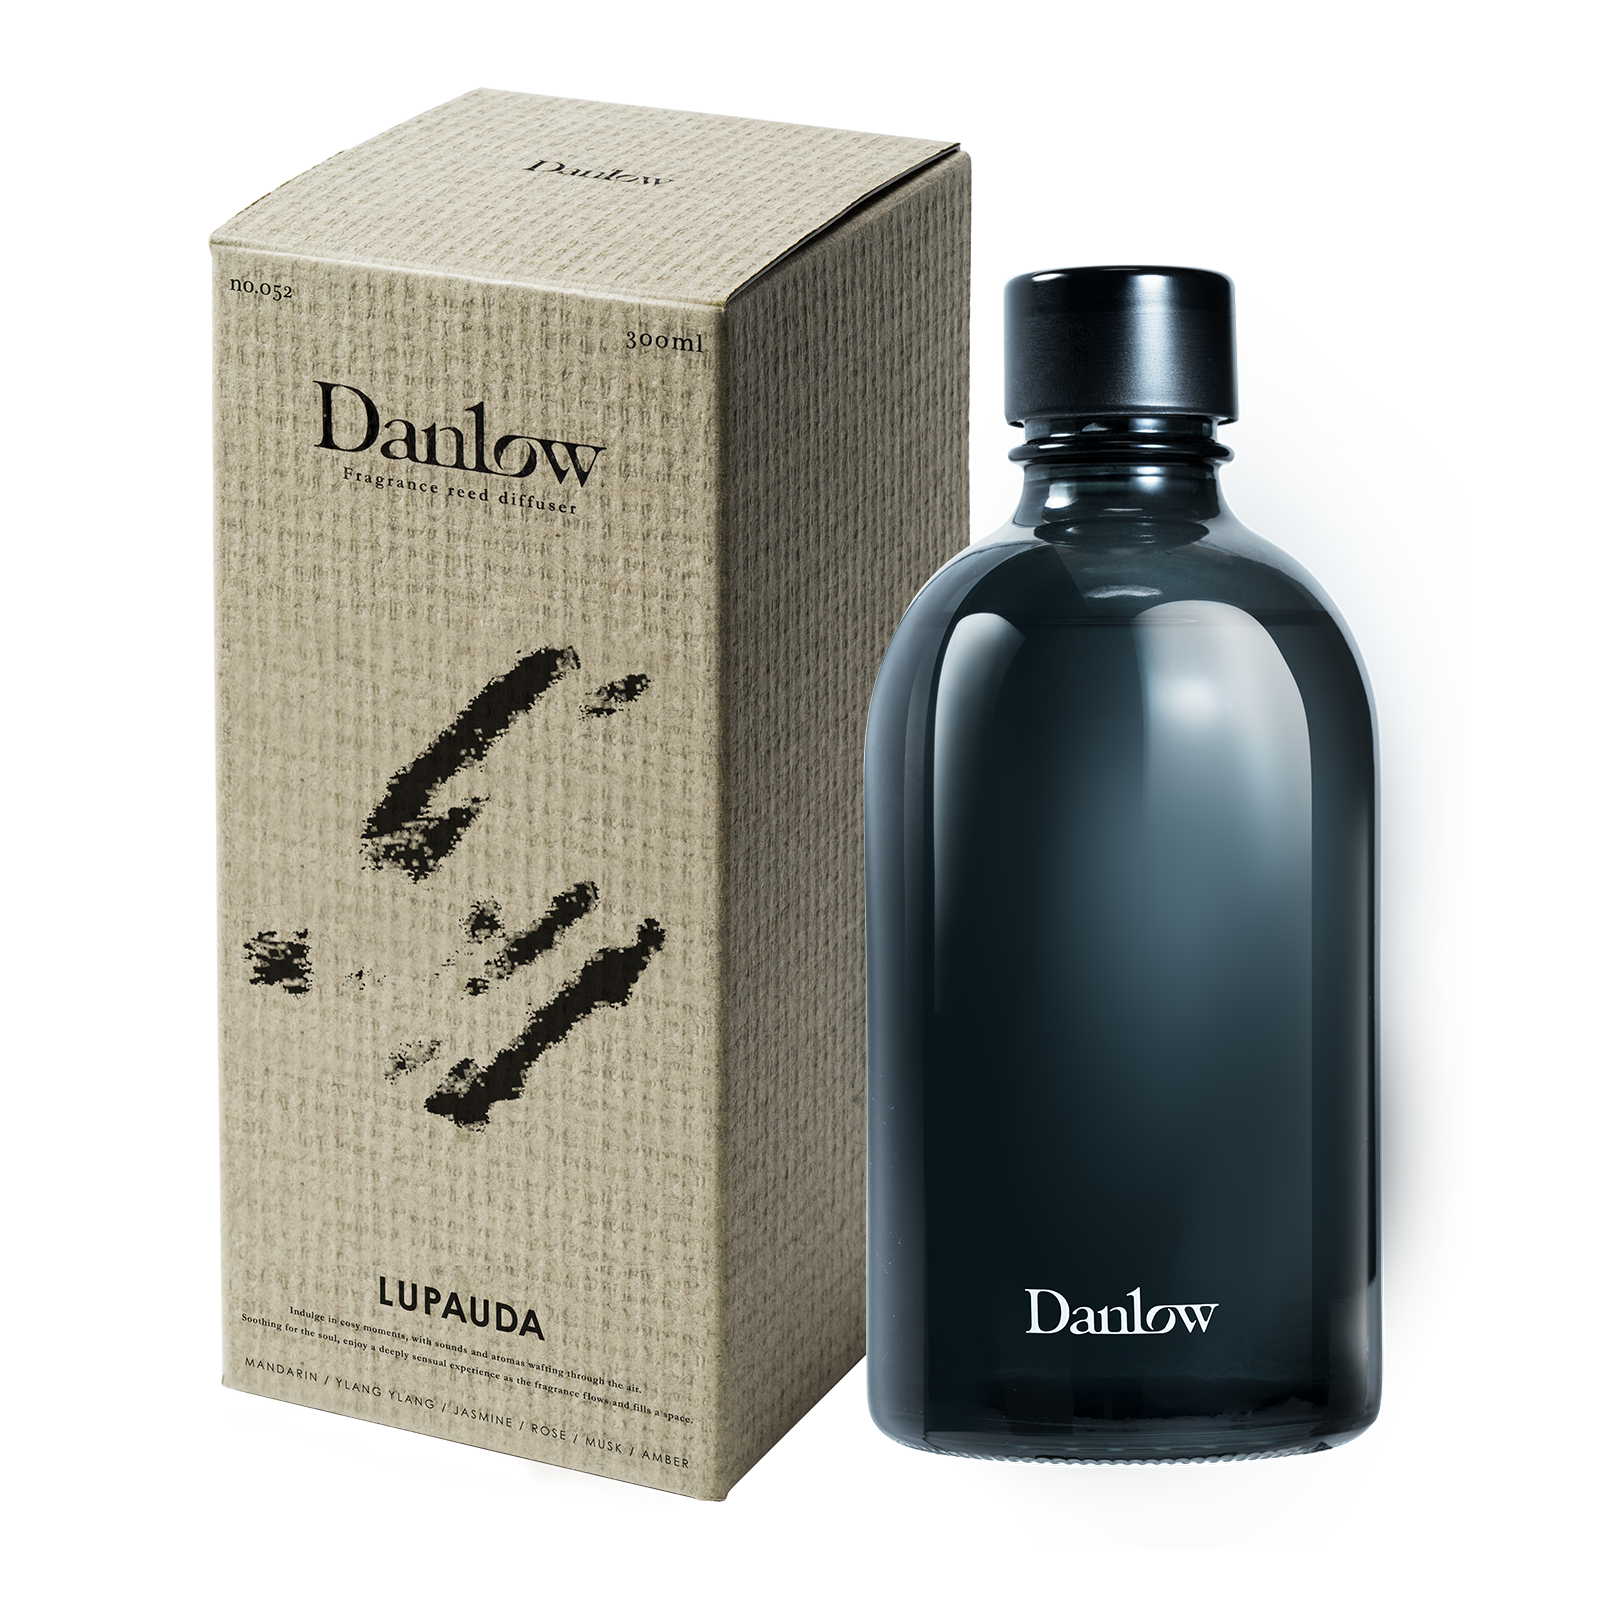 Danlow fragrance reed diffuser LUPATDA - 芳香器